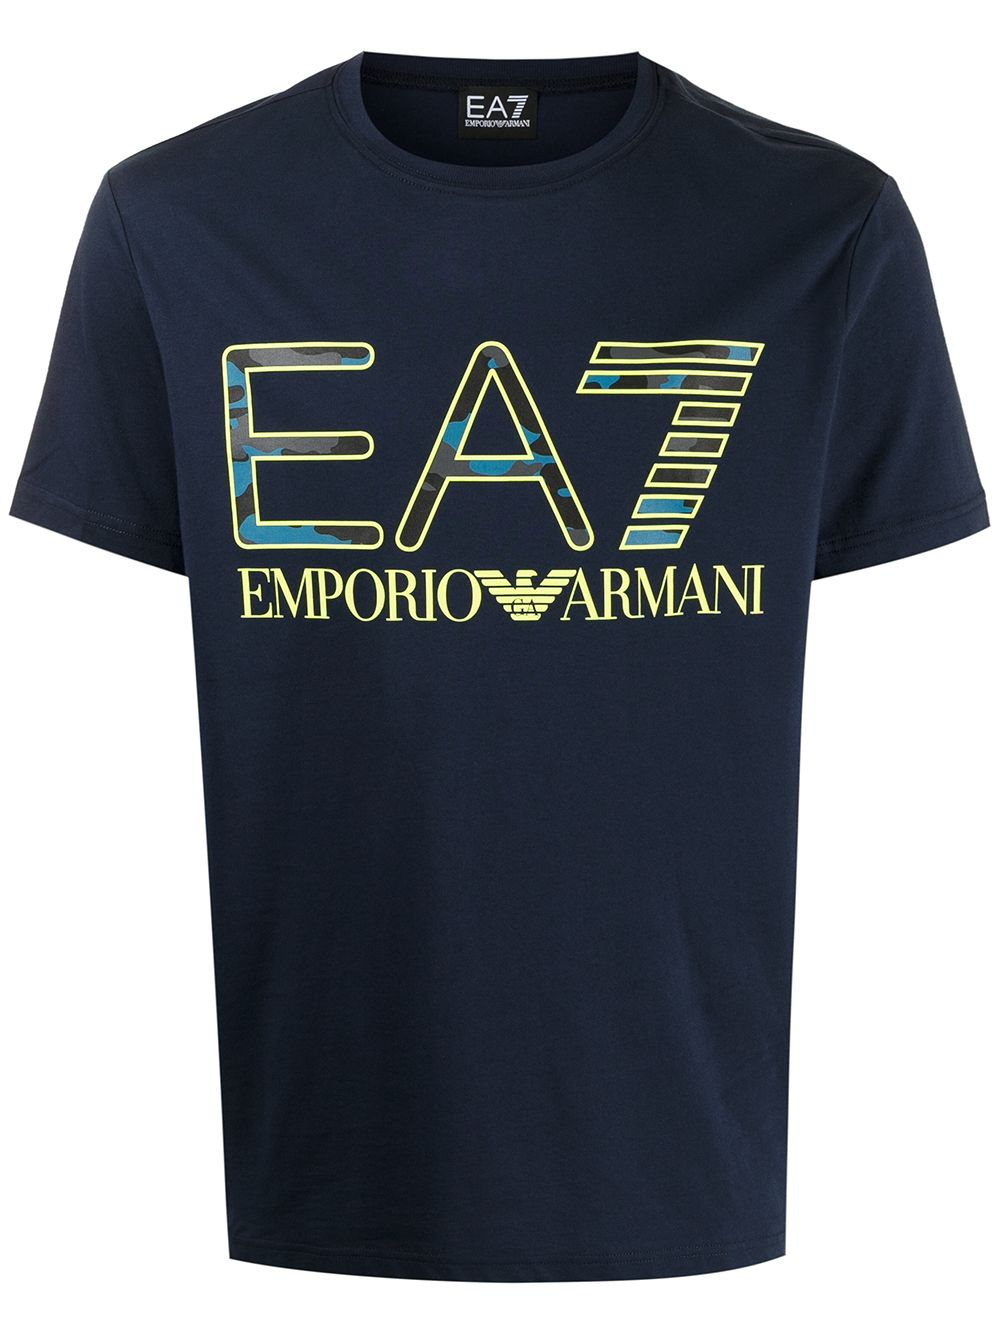 фото Ea7 emporio armani футболка с нашивкой-логотипом